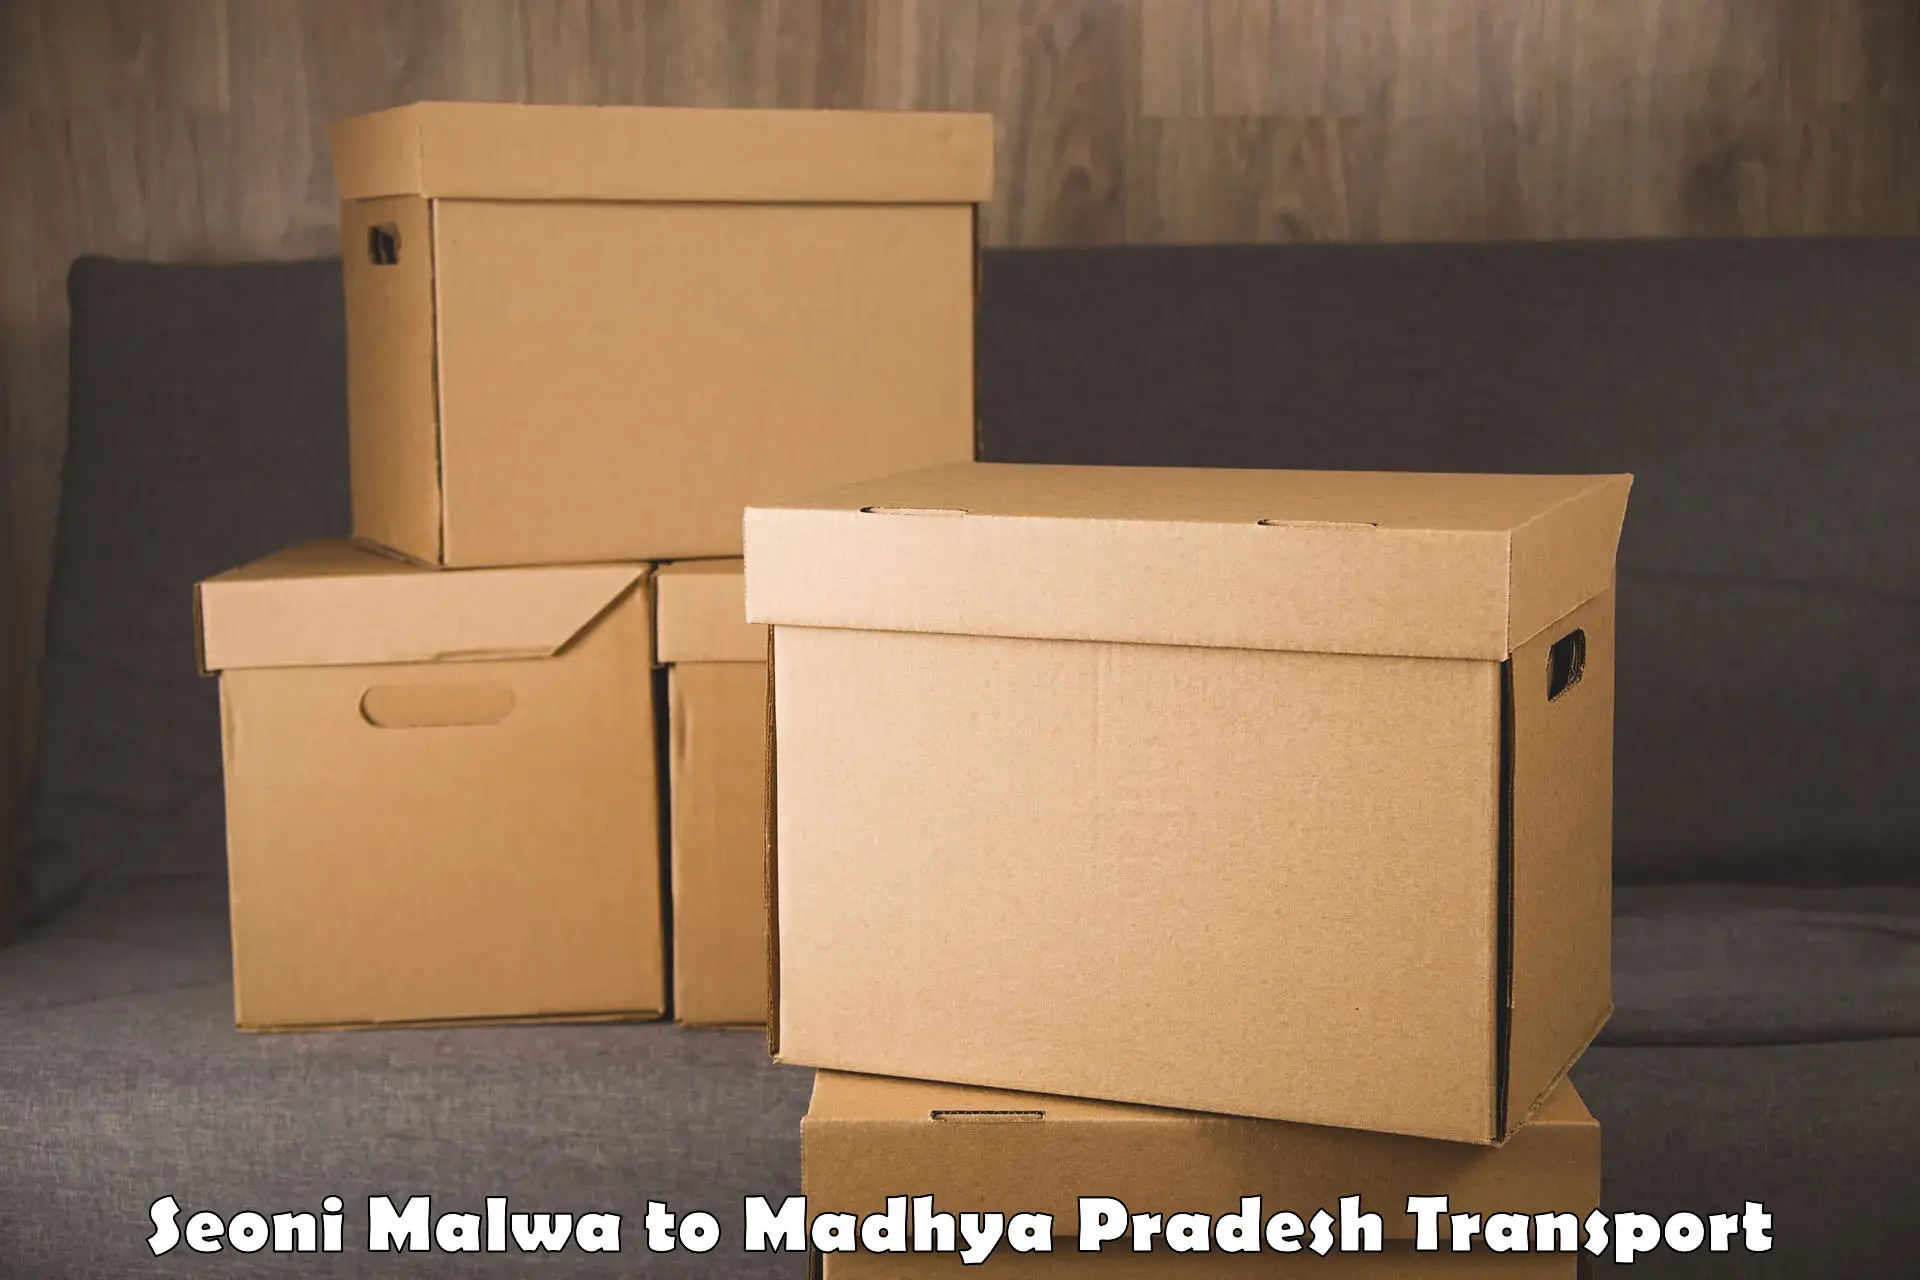 Commercial transport service Seoni Malwa to Mandideep